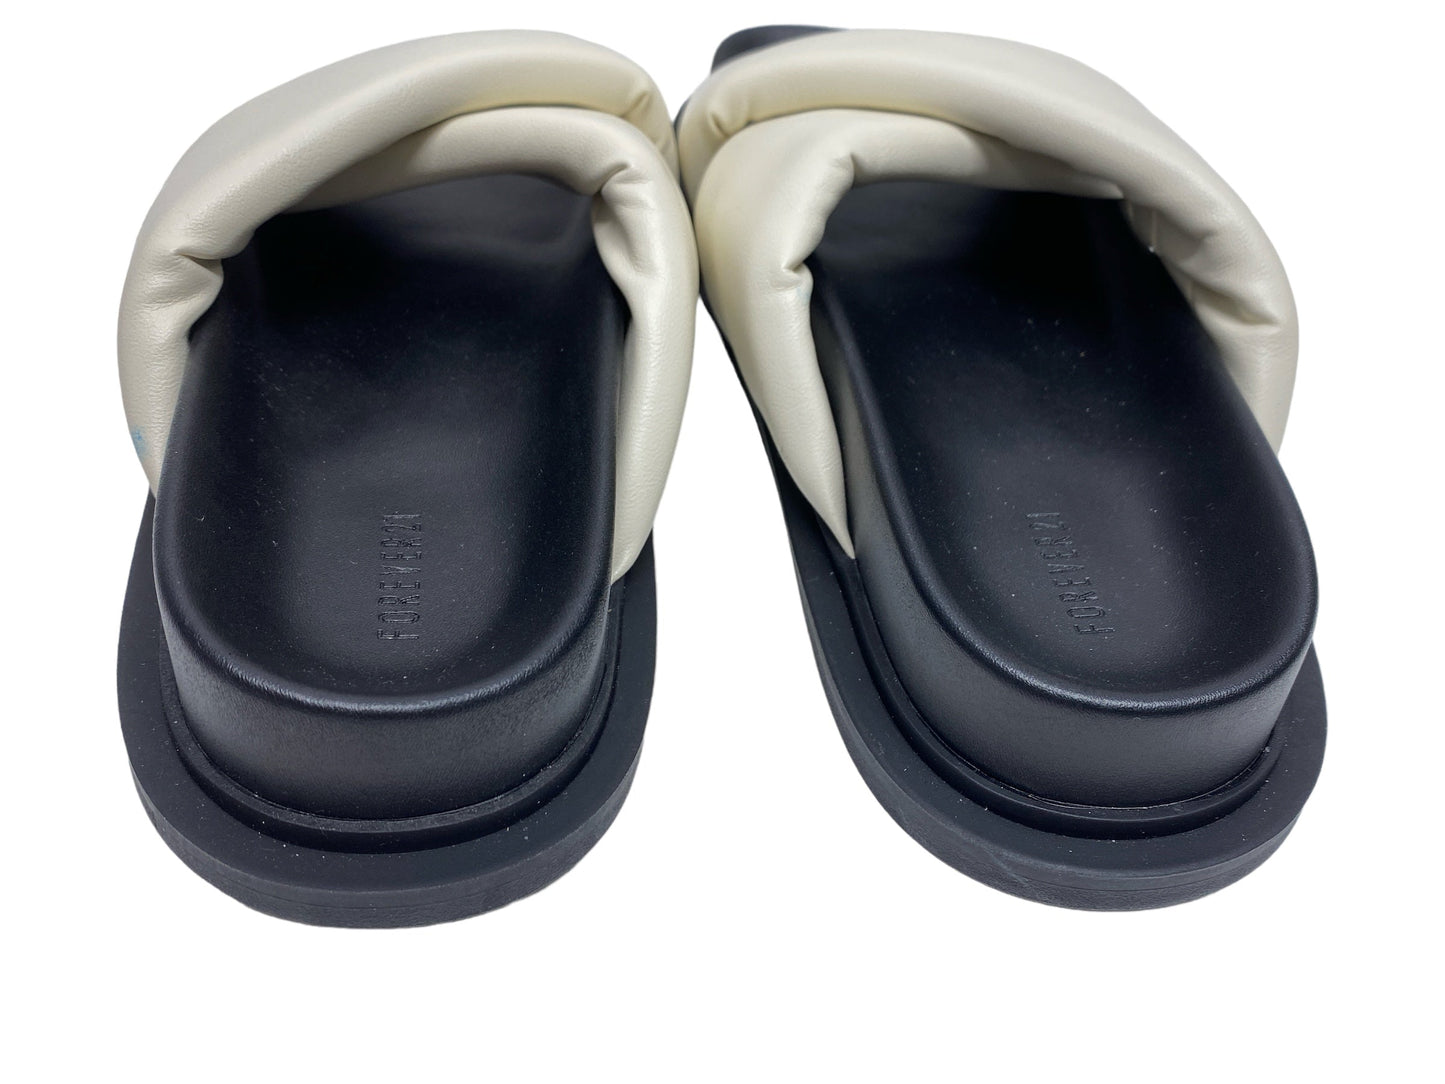 Black & White Sandals Flats Forever 21, Size 8